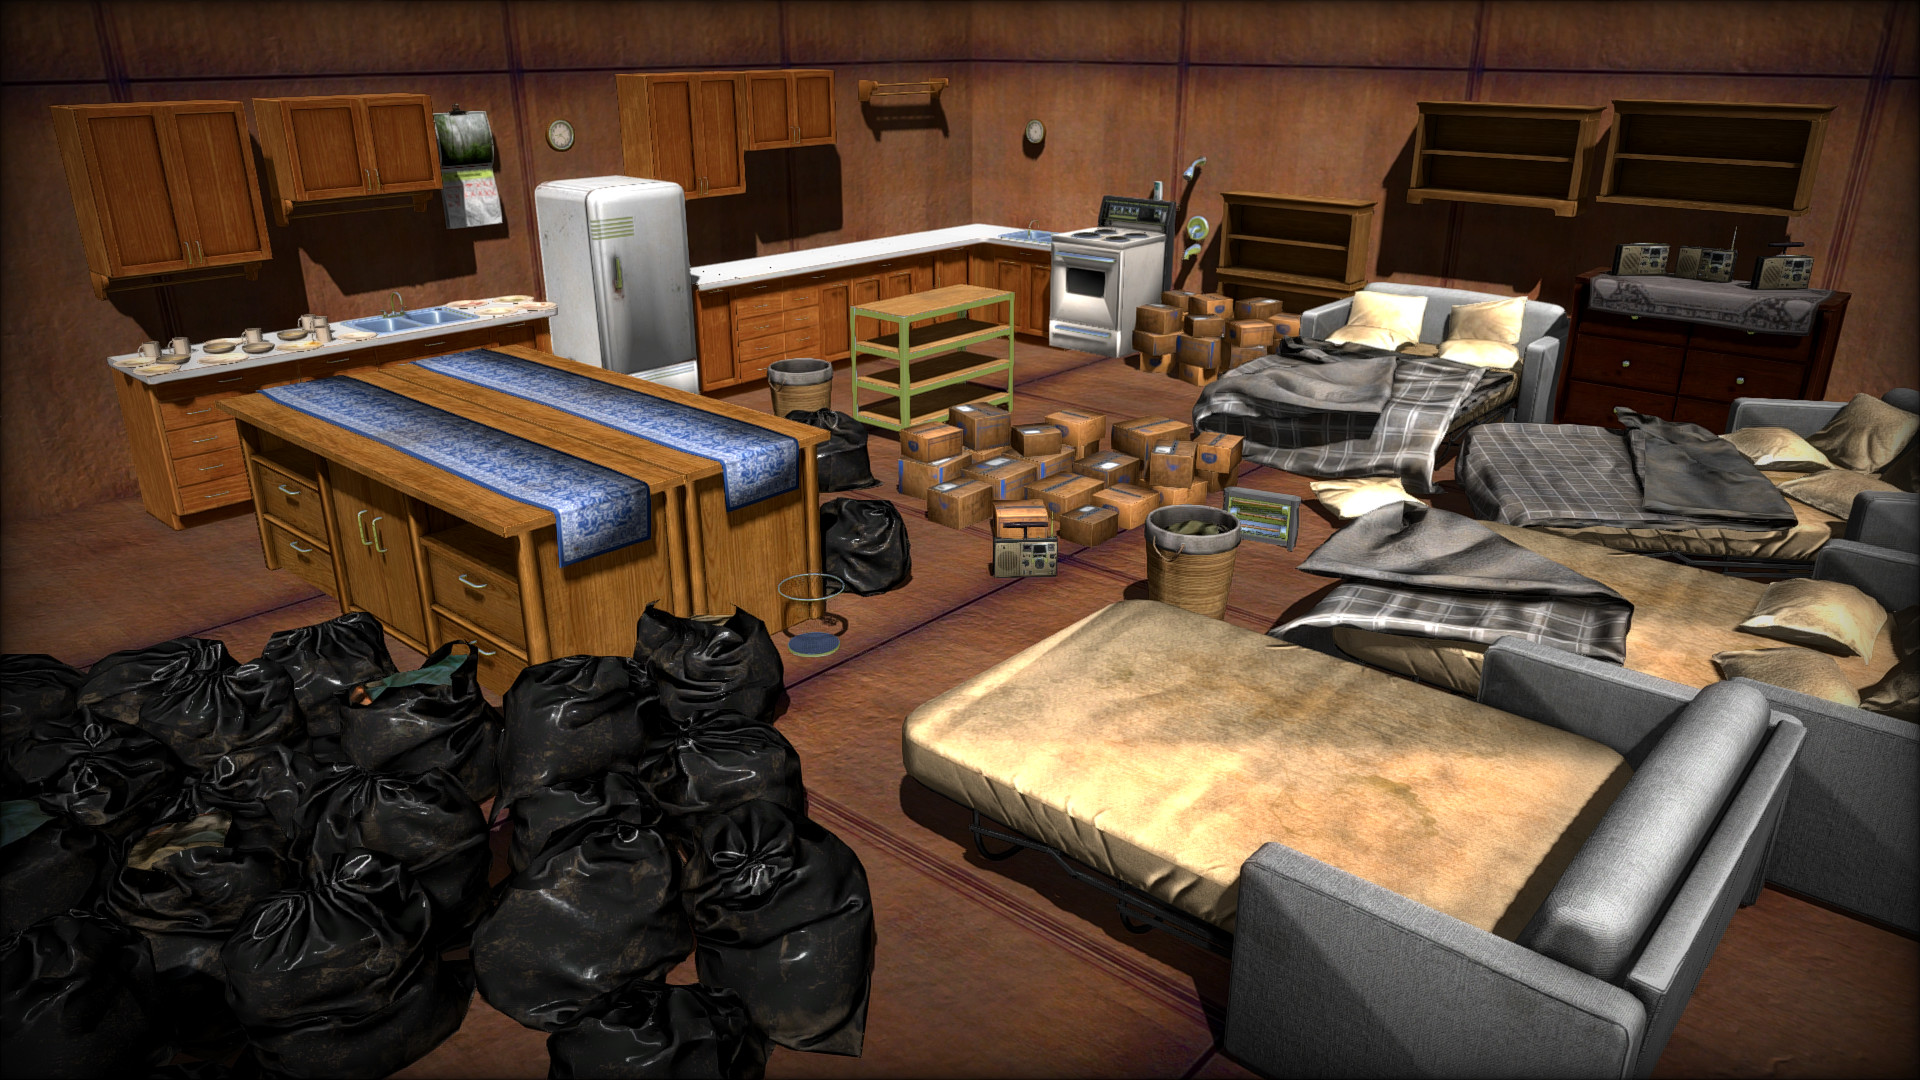 GameGuru - Abandoned Apartment Pack DLC EU Steam CD Key